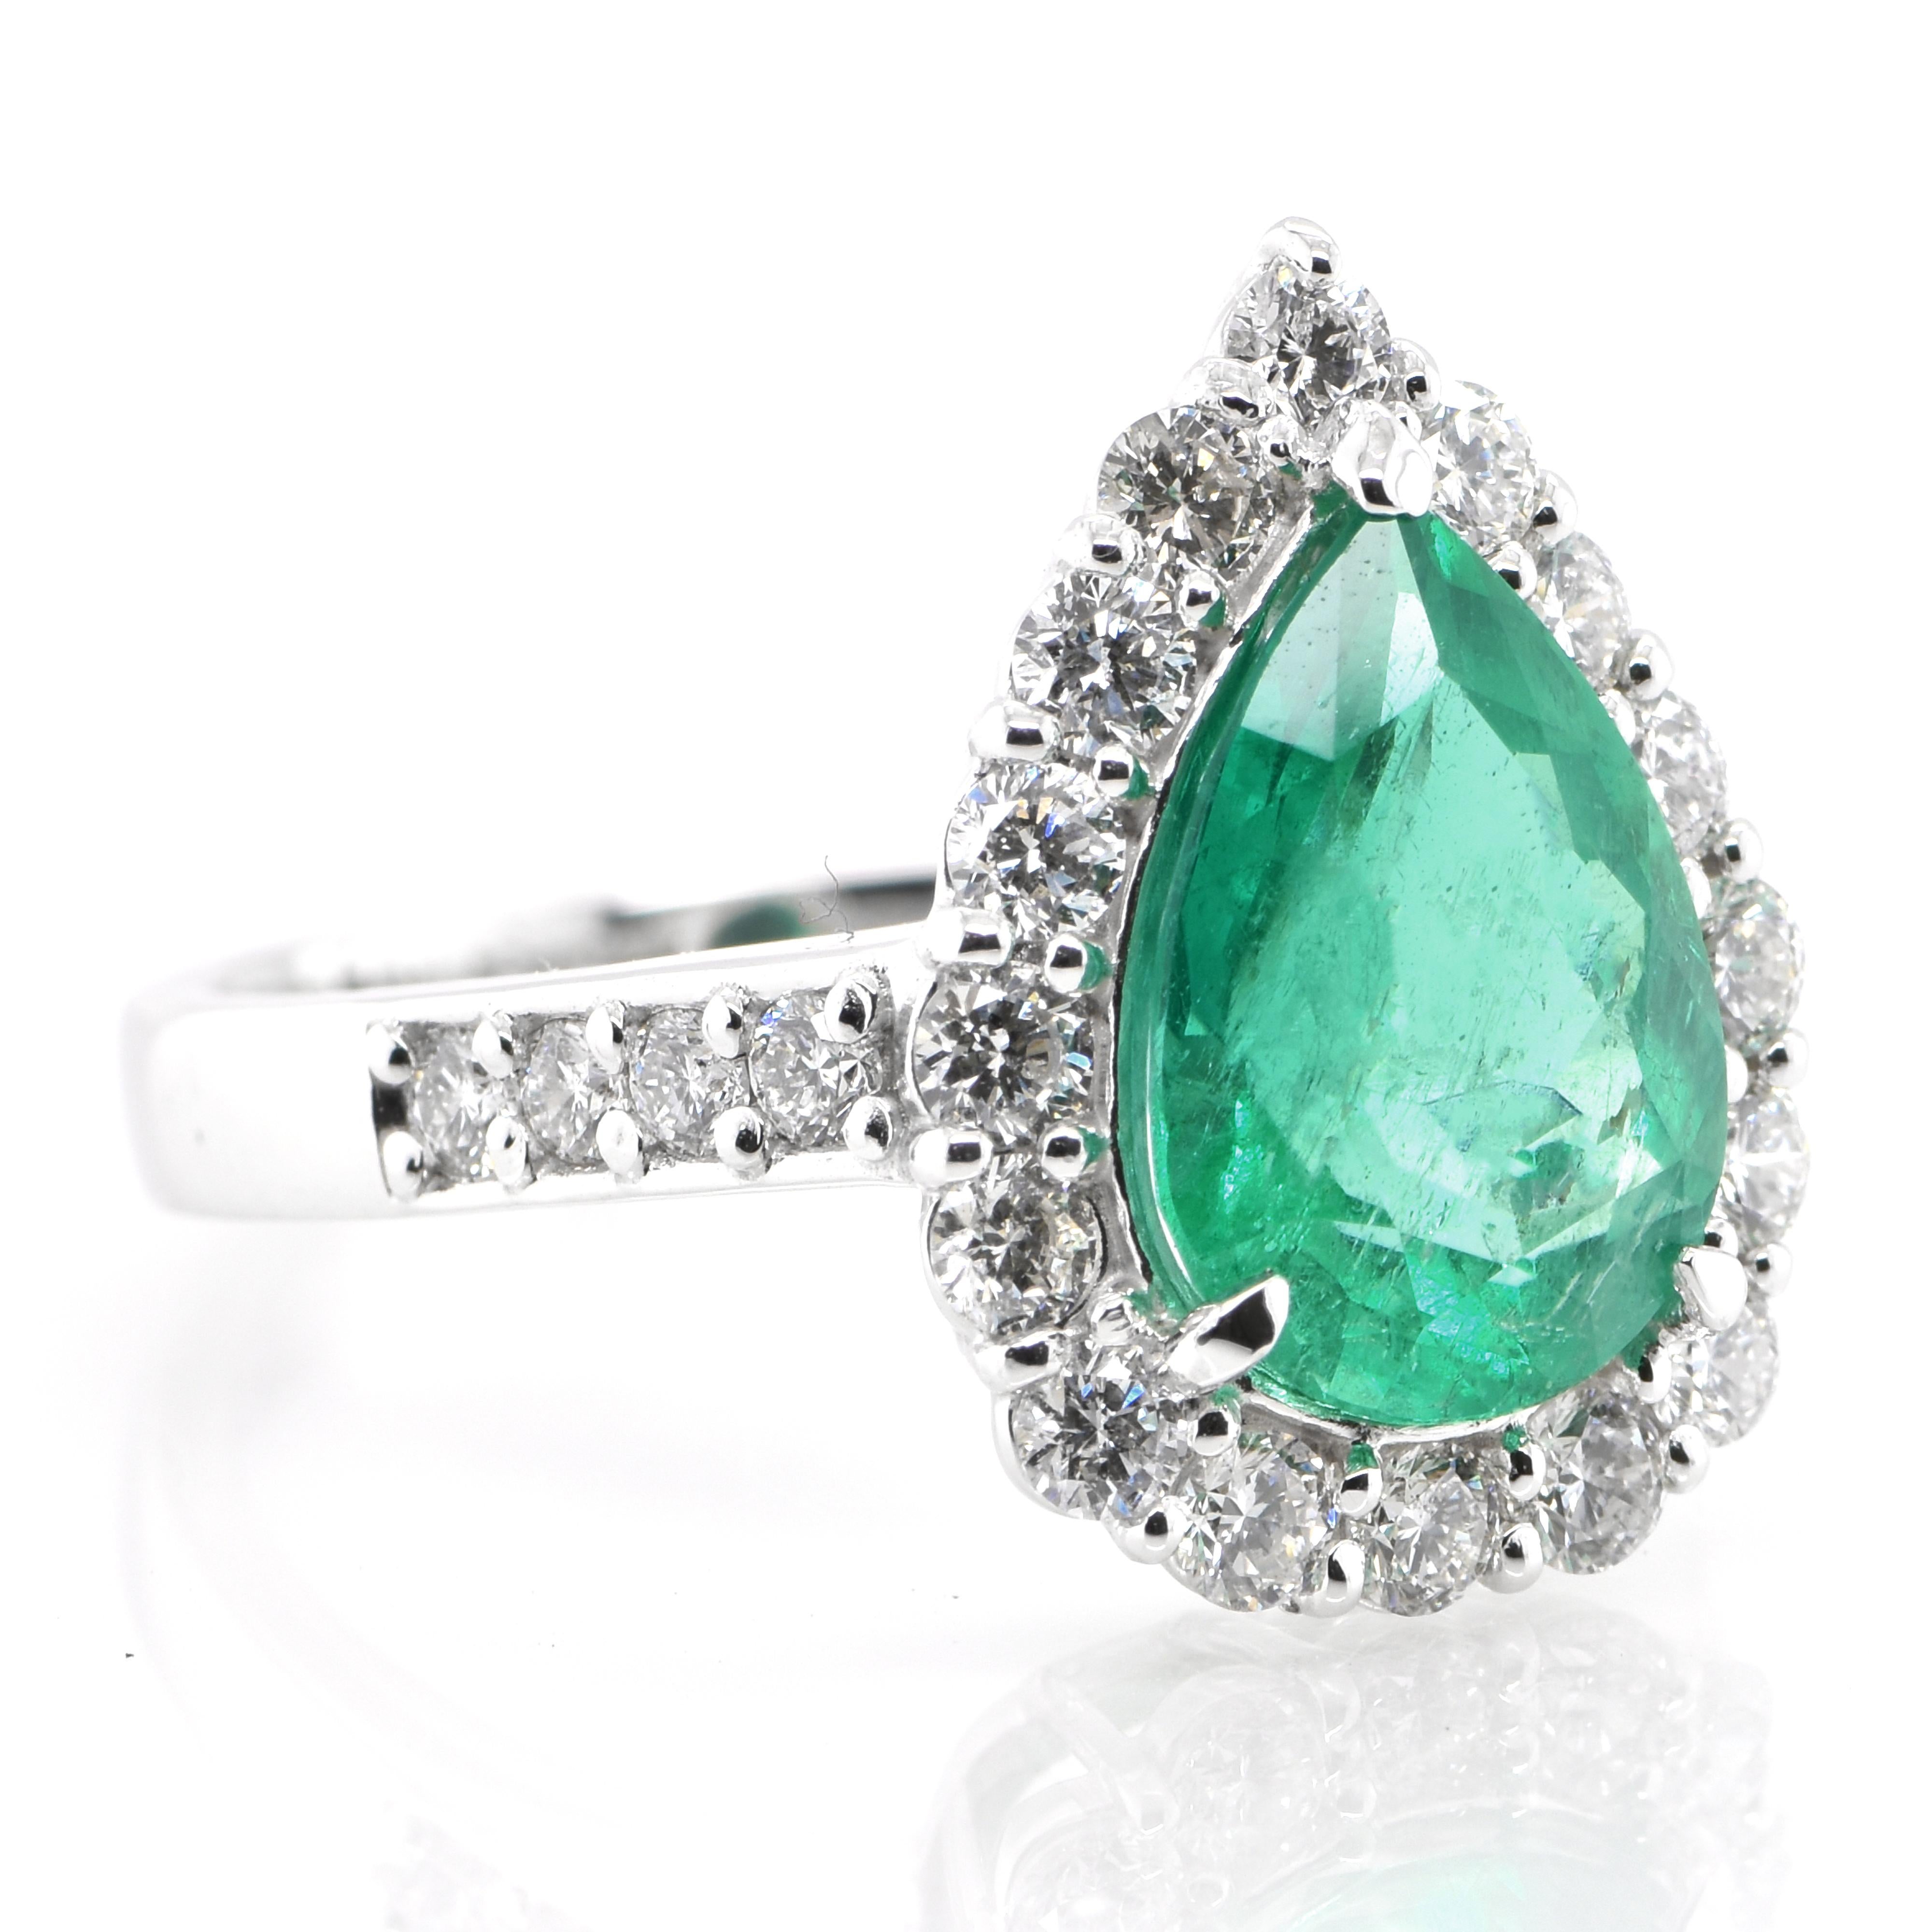 Modern 2.50 Carat Natural Pear-Cut Emerald and Diamond Ring Set in Platinum